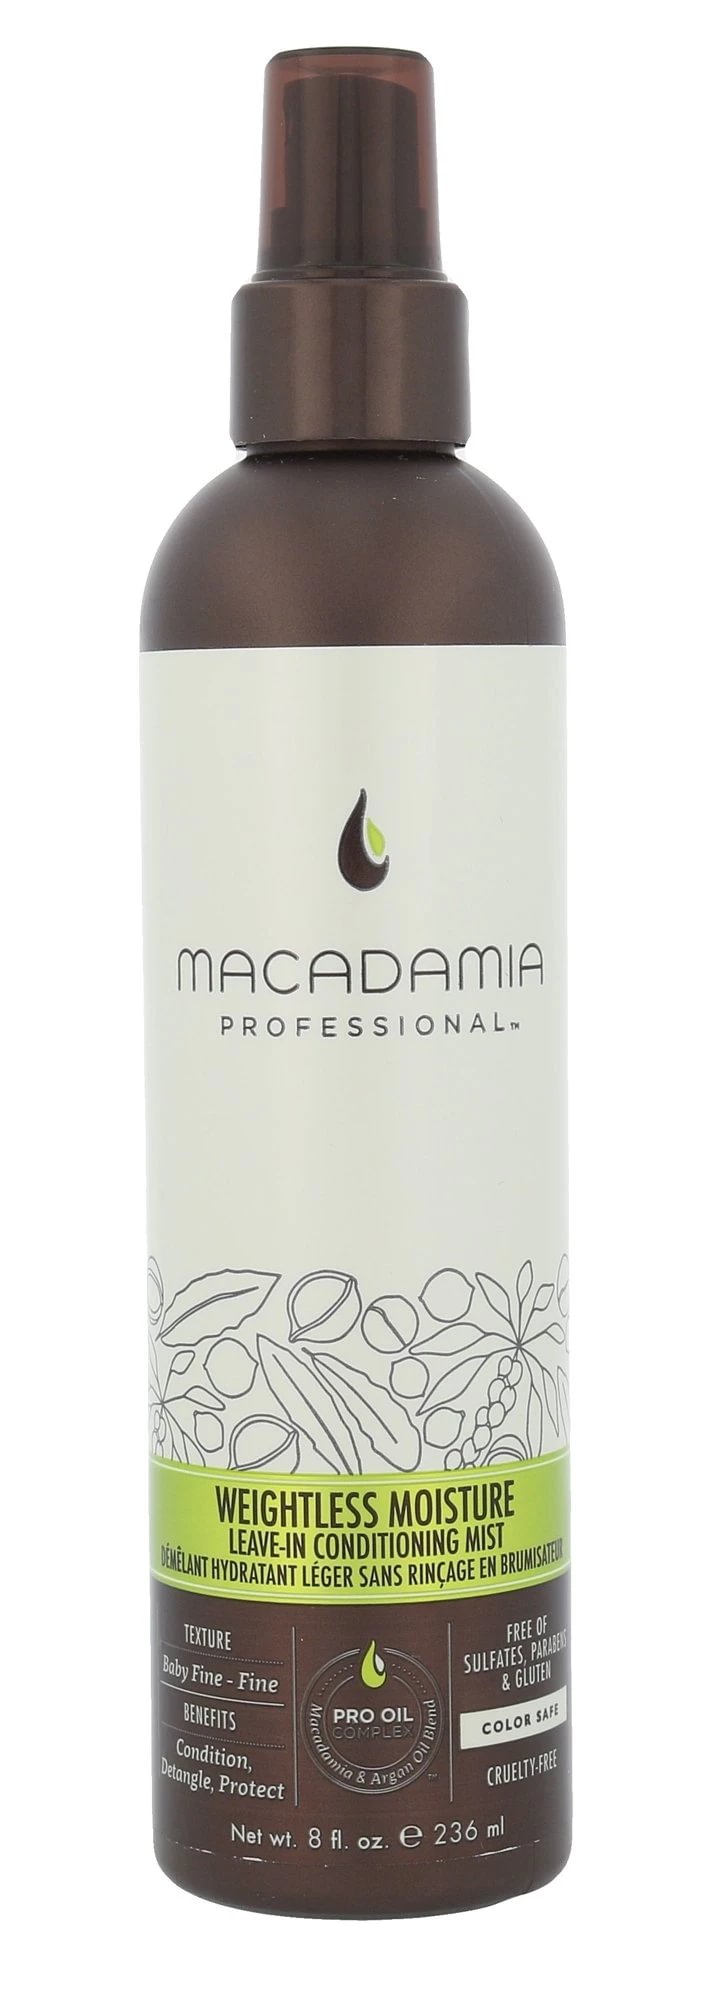 Macadamia Weightless Moisture Conditioning hair mist 236 ml